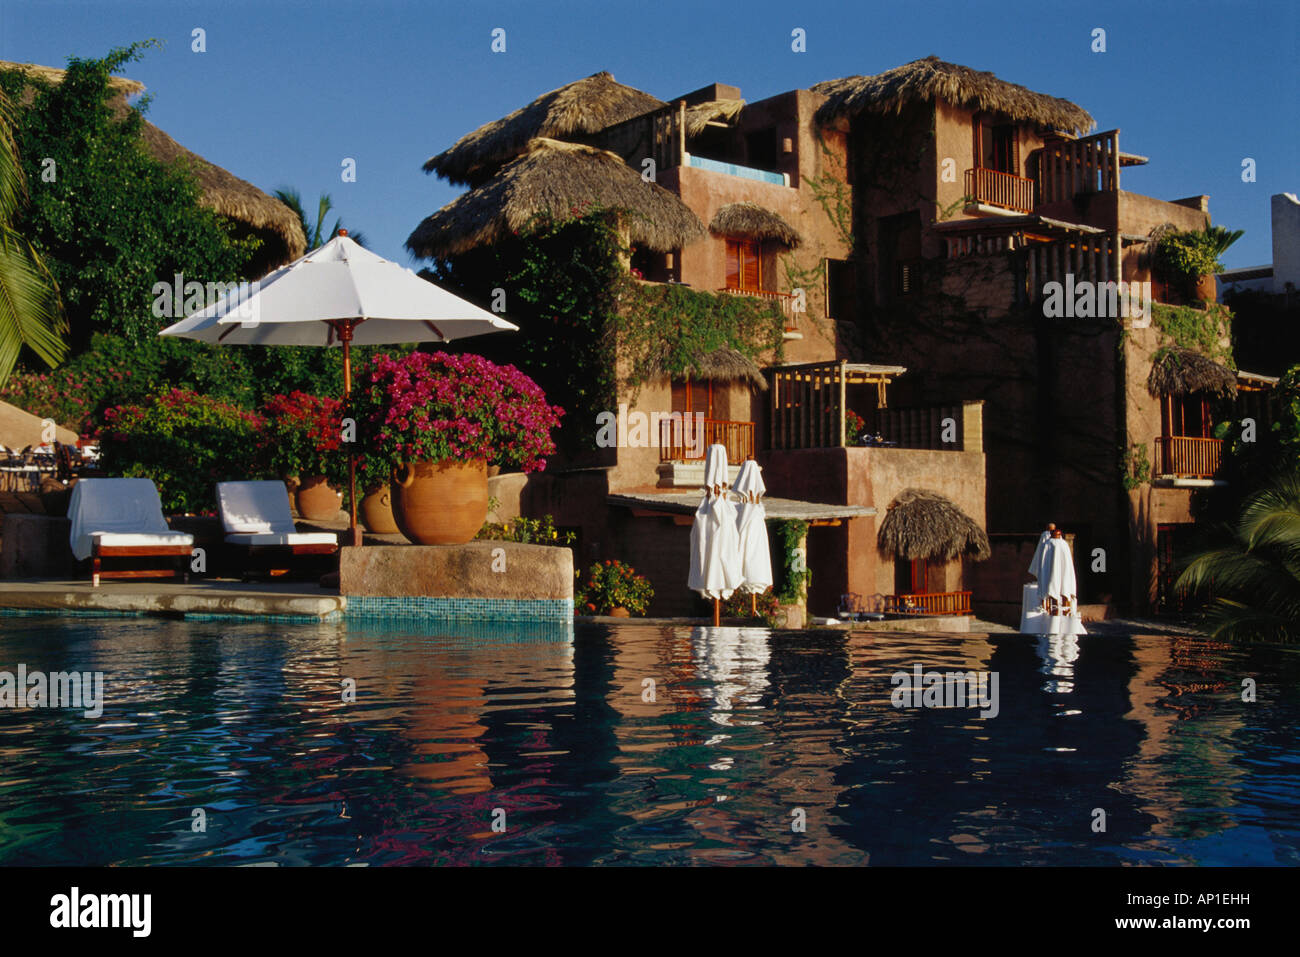 Small Luxury Hotel with reflection in water, La Casa que canta Zihuatanejo, Guerrero, Mexico, America Stock Photo